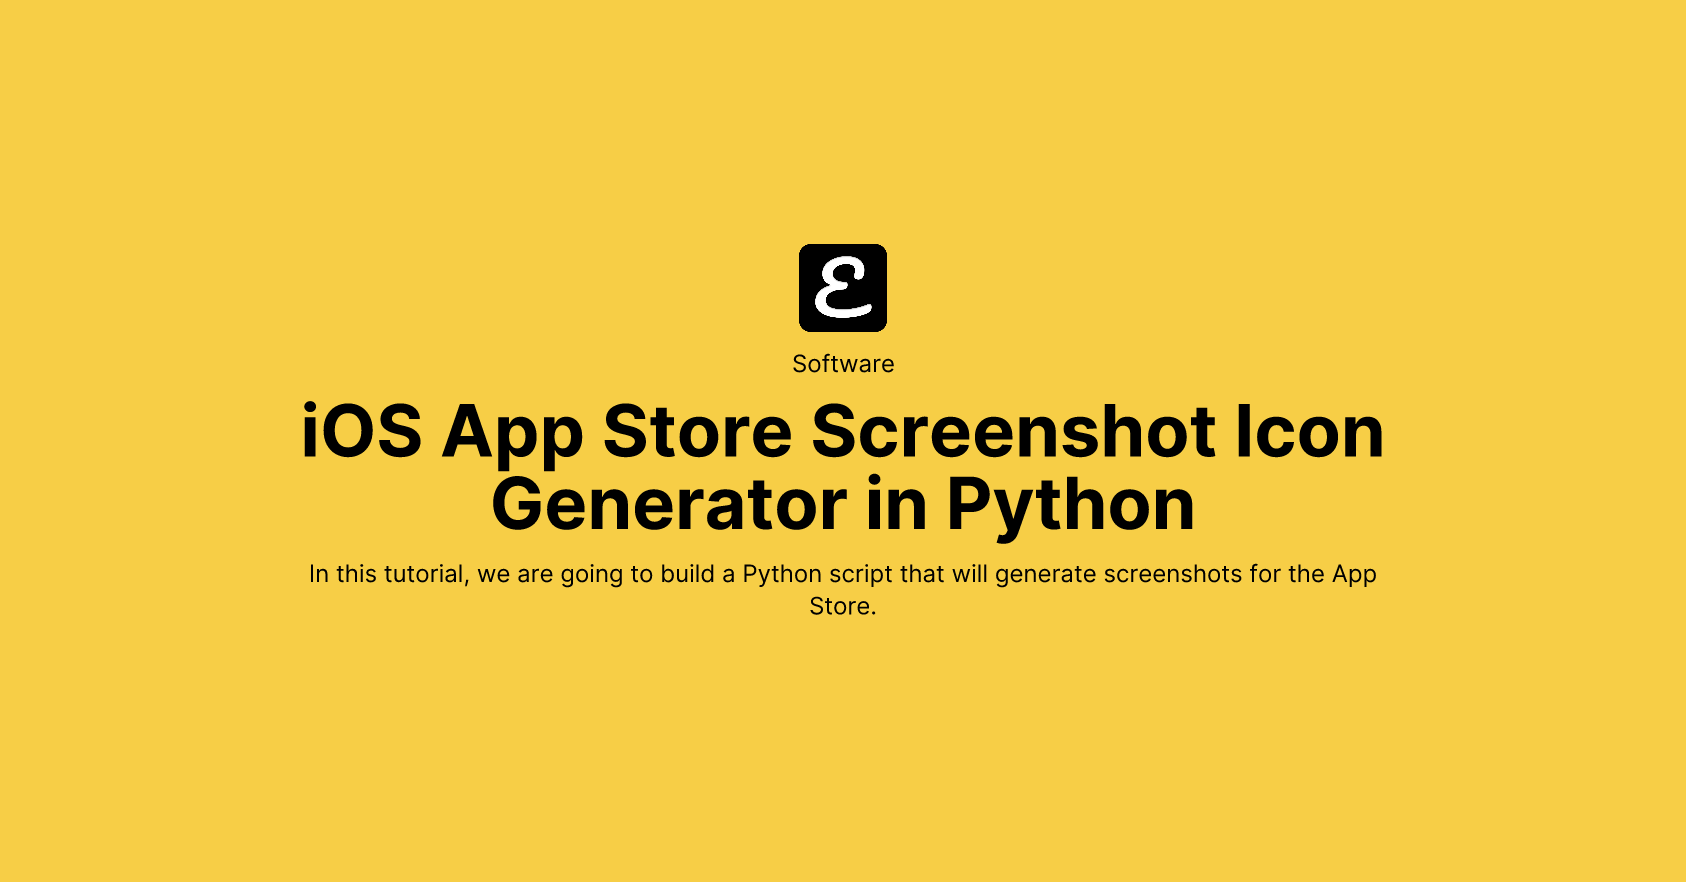 iOS App Store Screenshot Icon Generator in Python by Eric David Smith